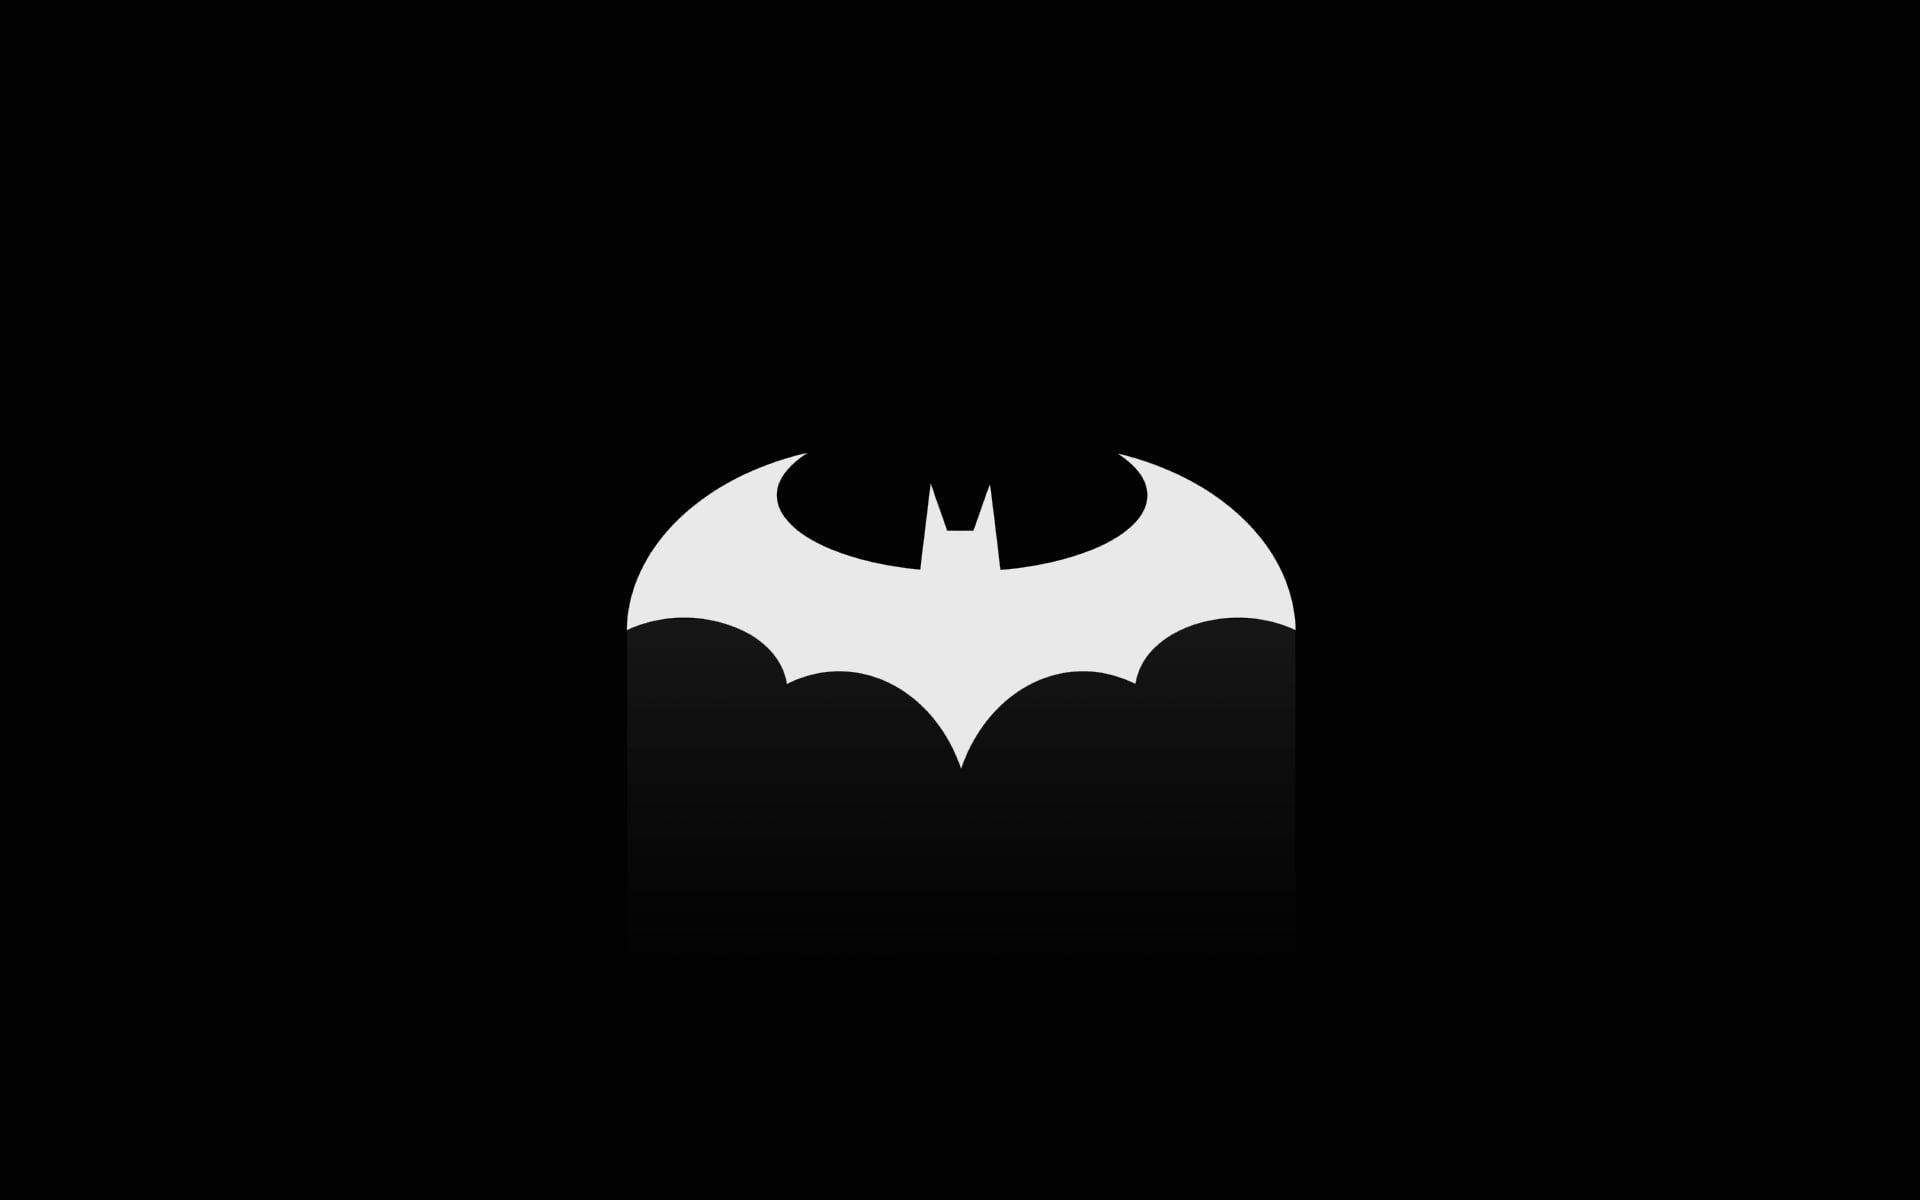 Digital Art Batman sign at 1024 x 1024 iPad size wallpapers HD quality